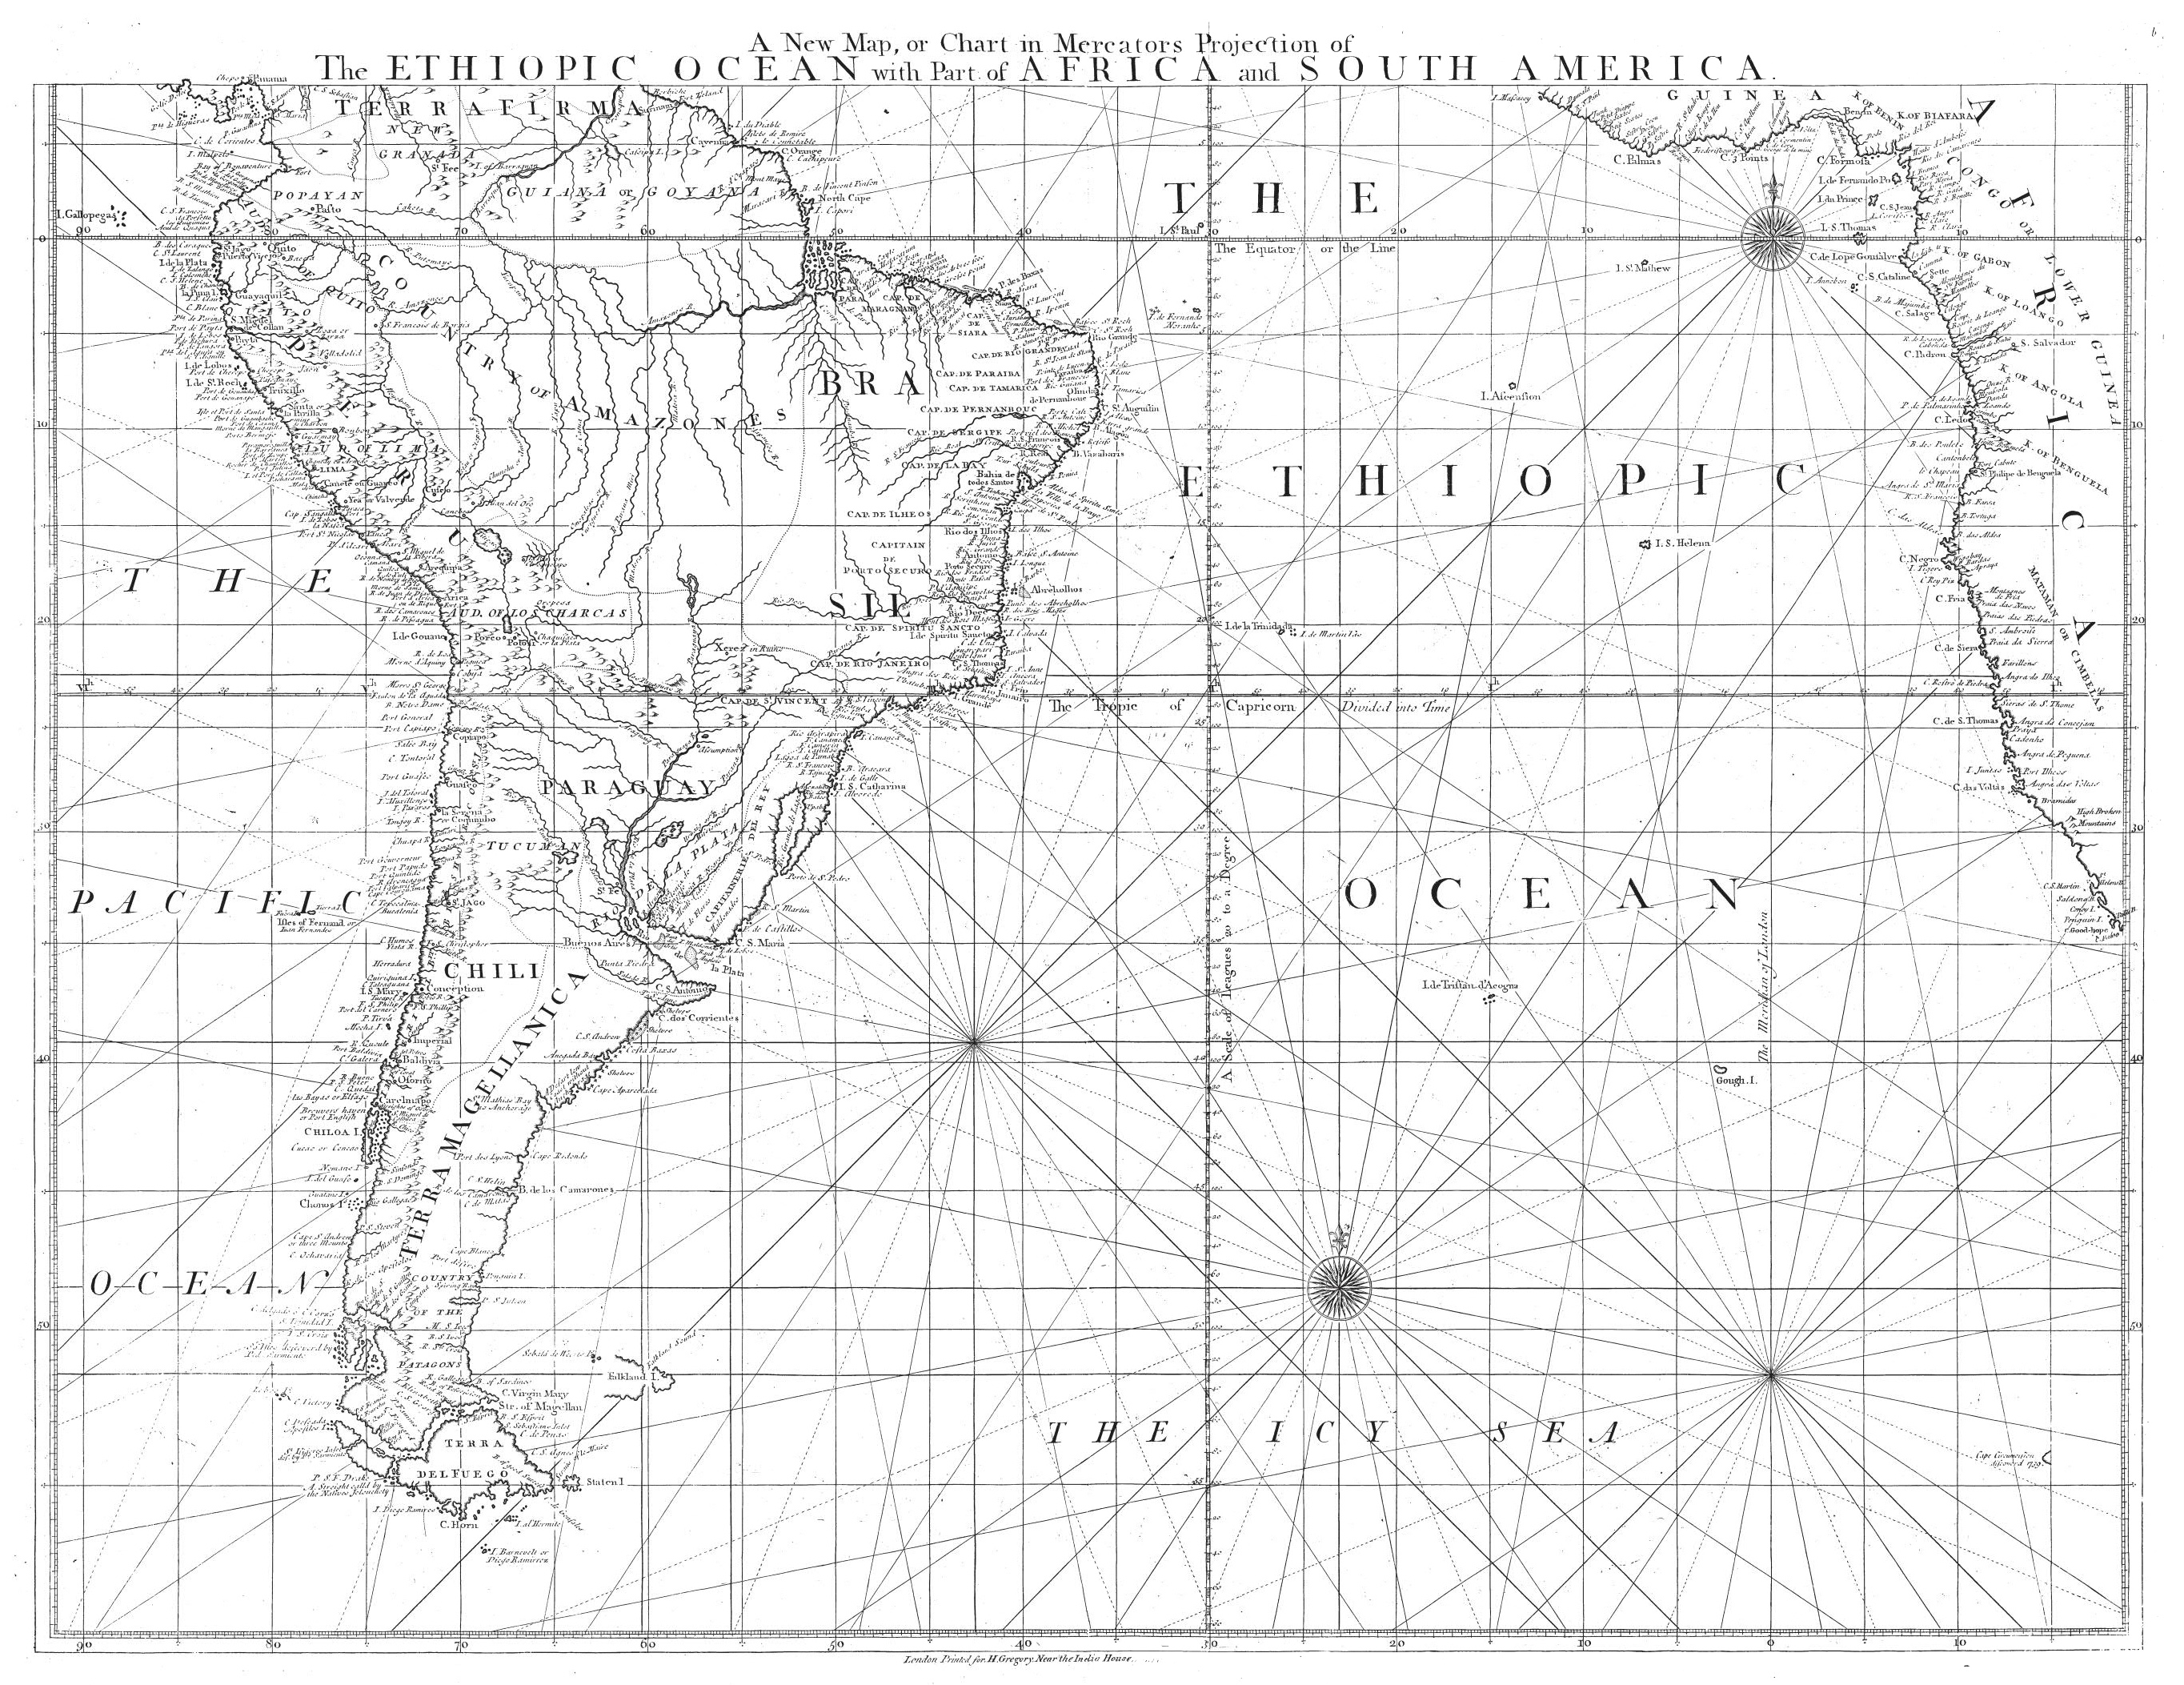 The Ethiopic Ocean and Luiz Felipe de Alencastro’s New Perspectives on the South Atlantic